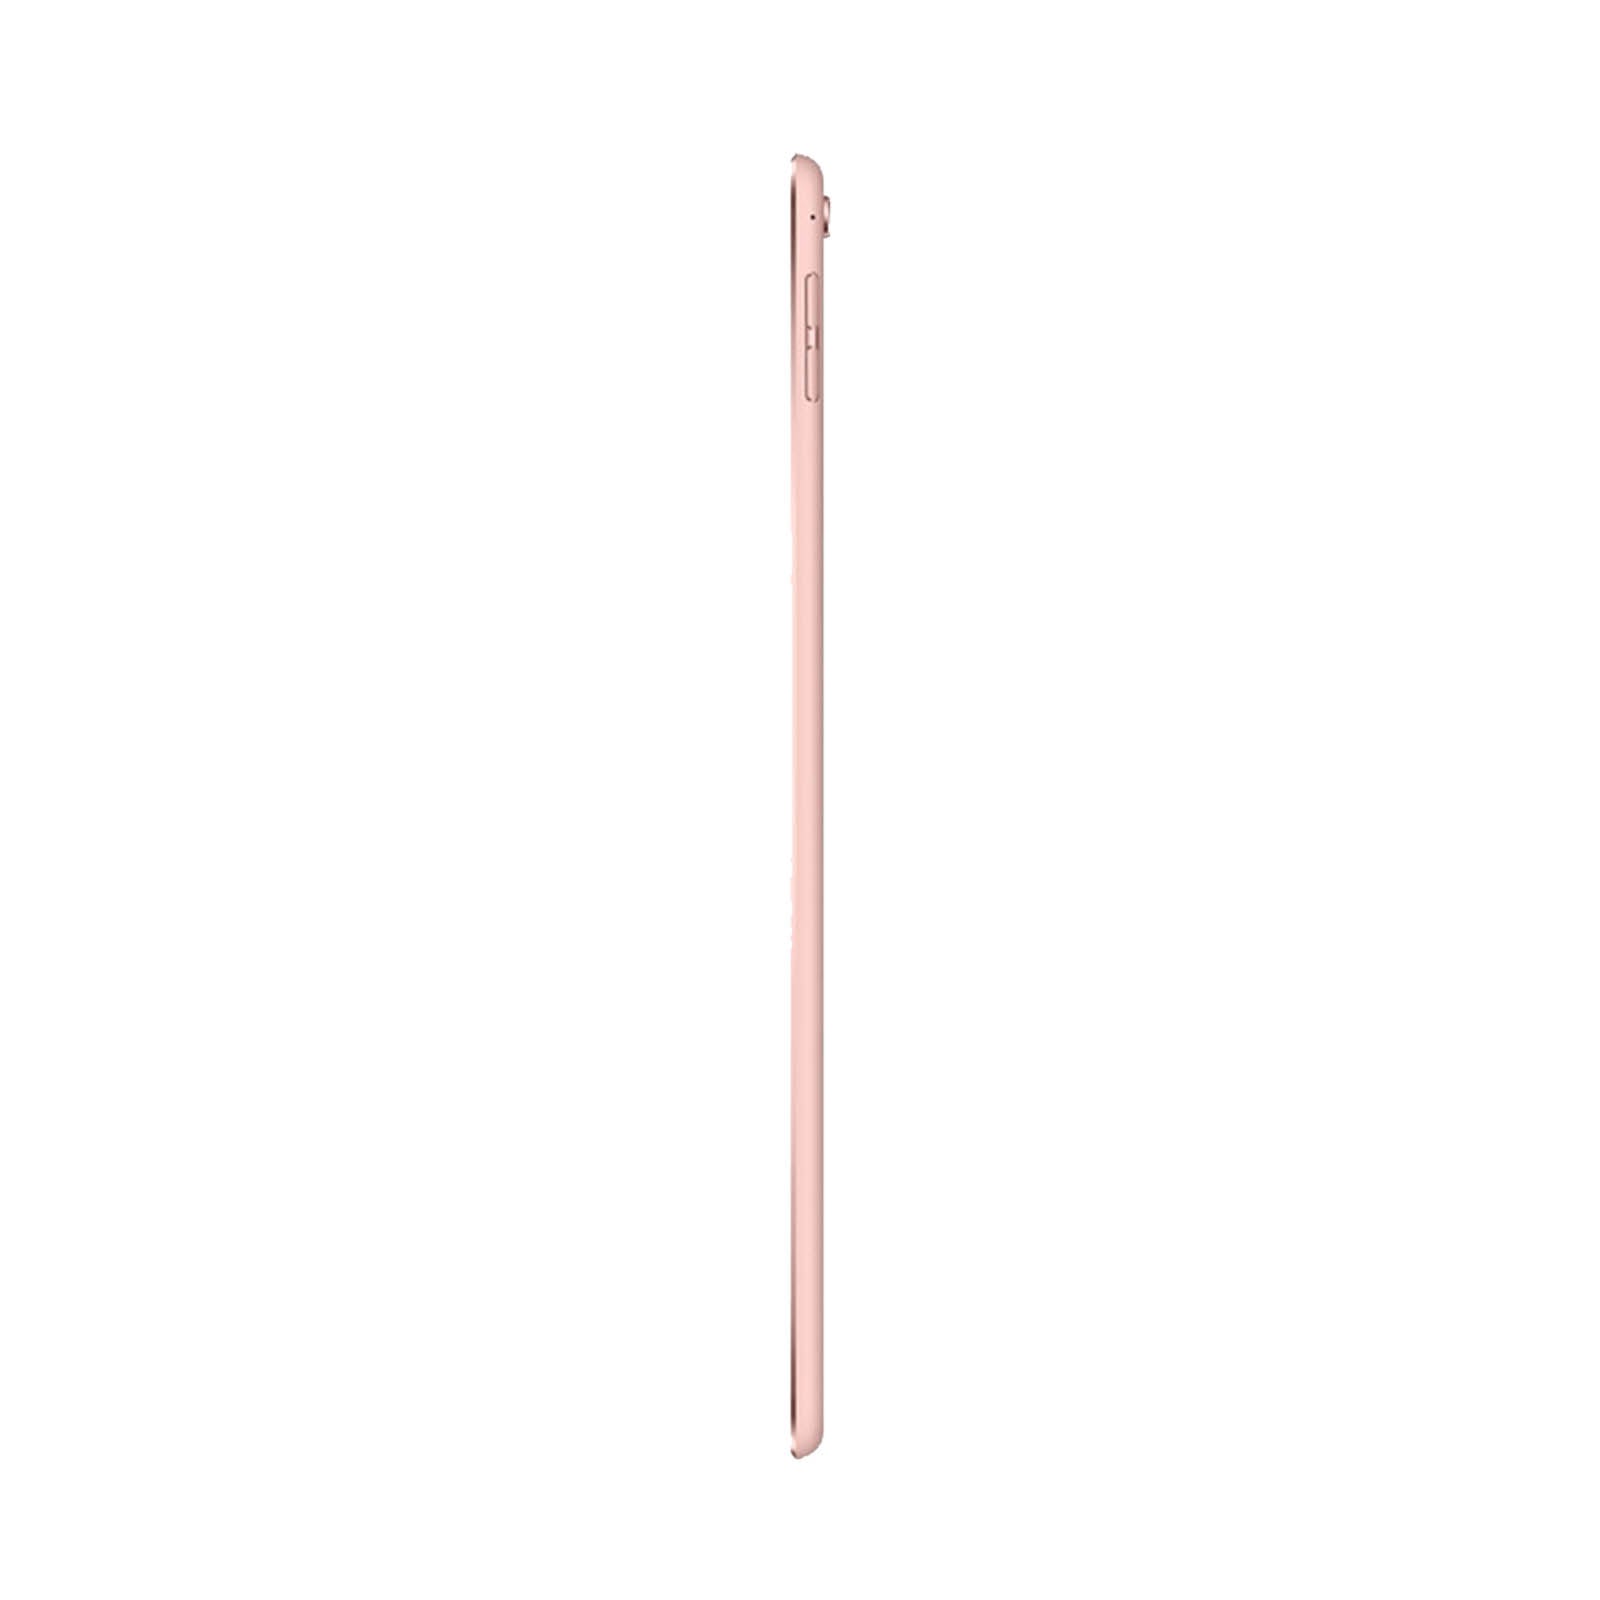 Apple iPad Pro 9.7" 128GB Rose Gold Very Good - WiFi